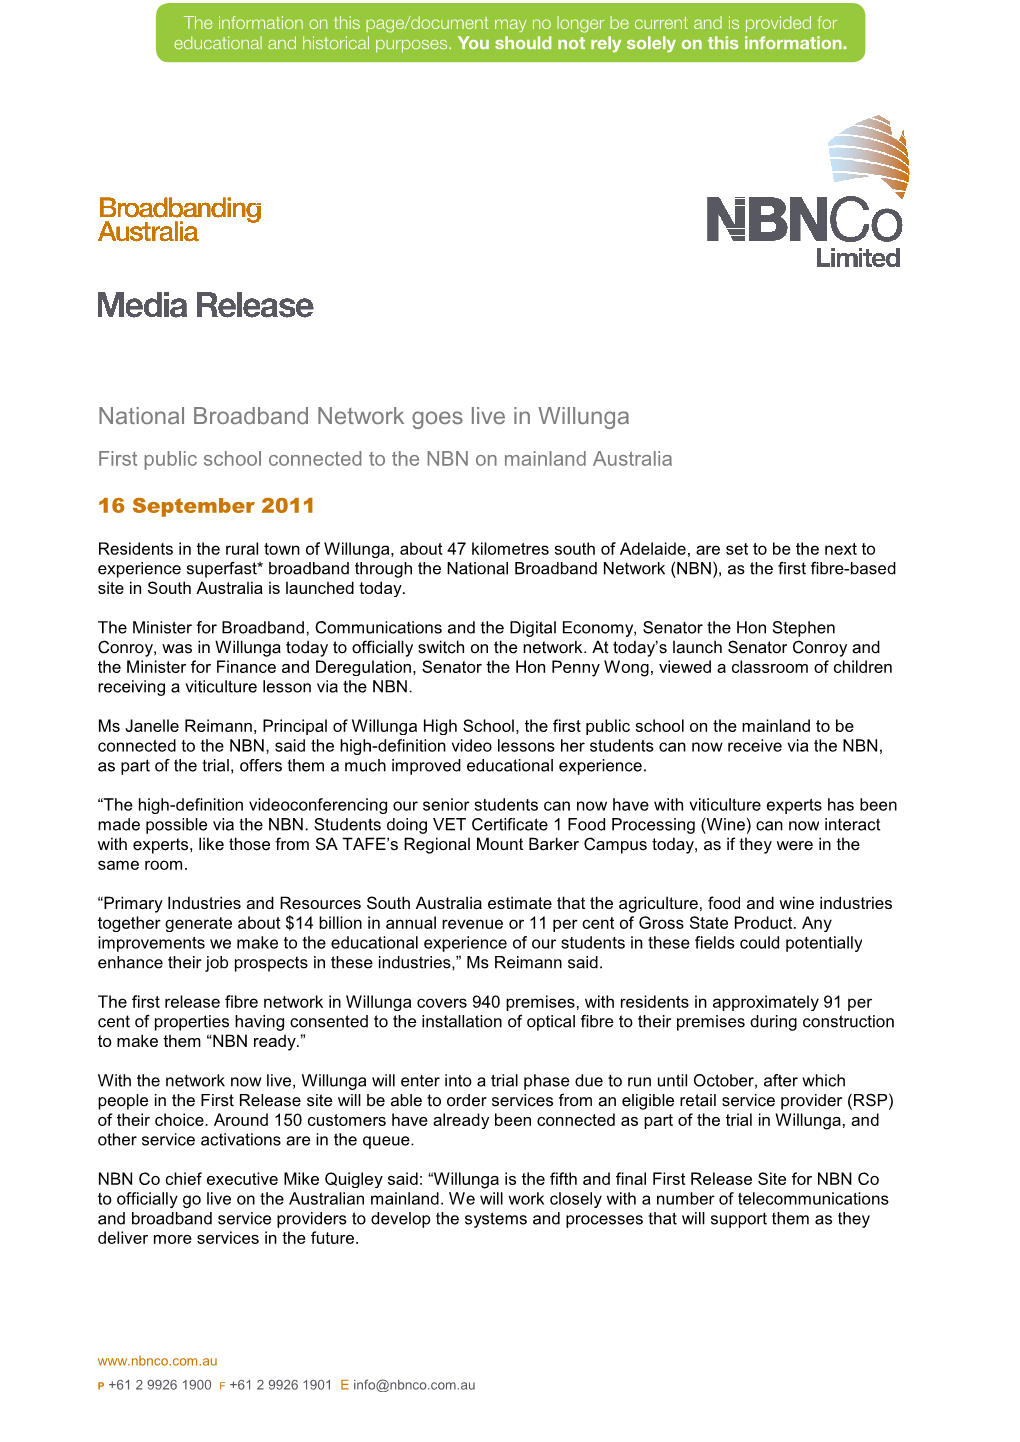 National Broadband Network Band Network Goes Live in Willunga